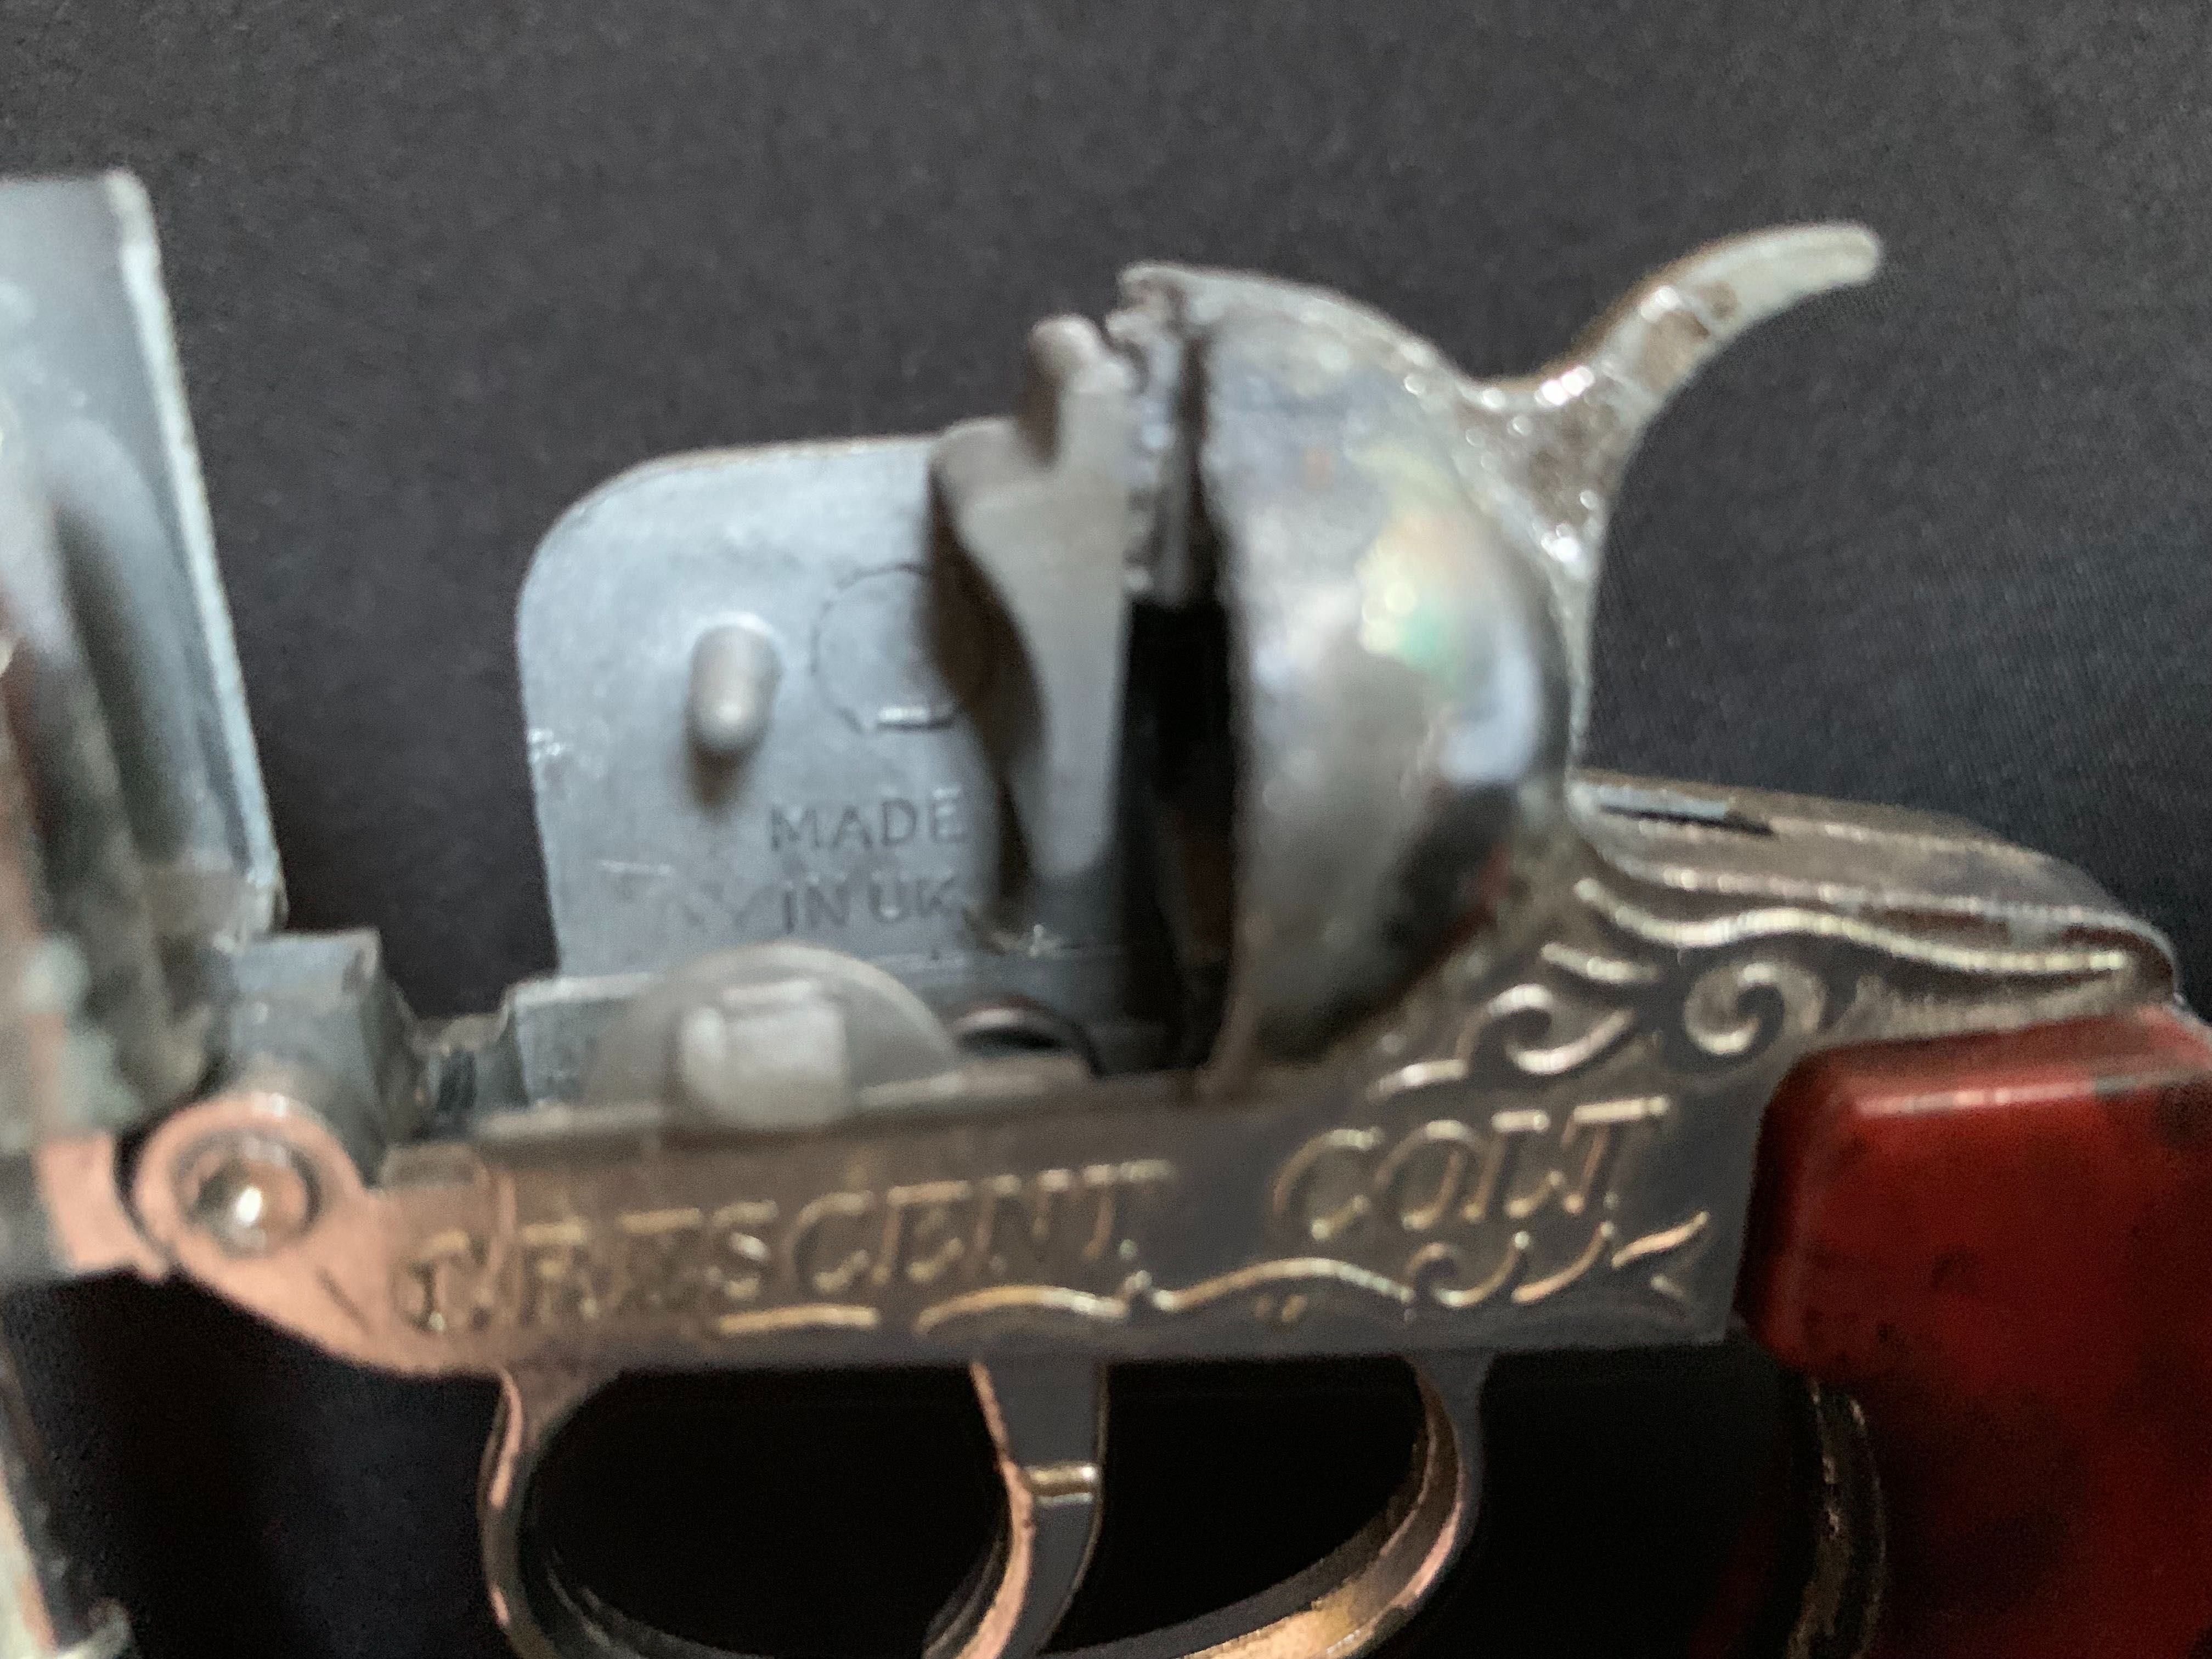 2 Pistolas de Brincar Antigas - Crescent Colt - Inglaterra - Anos 60